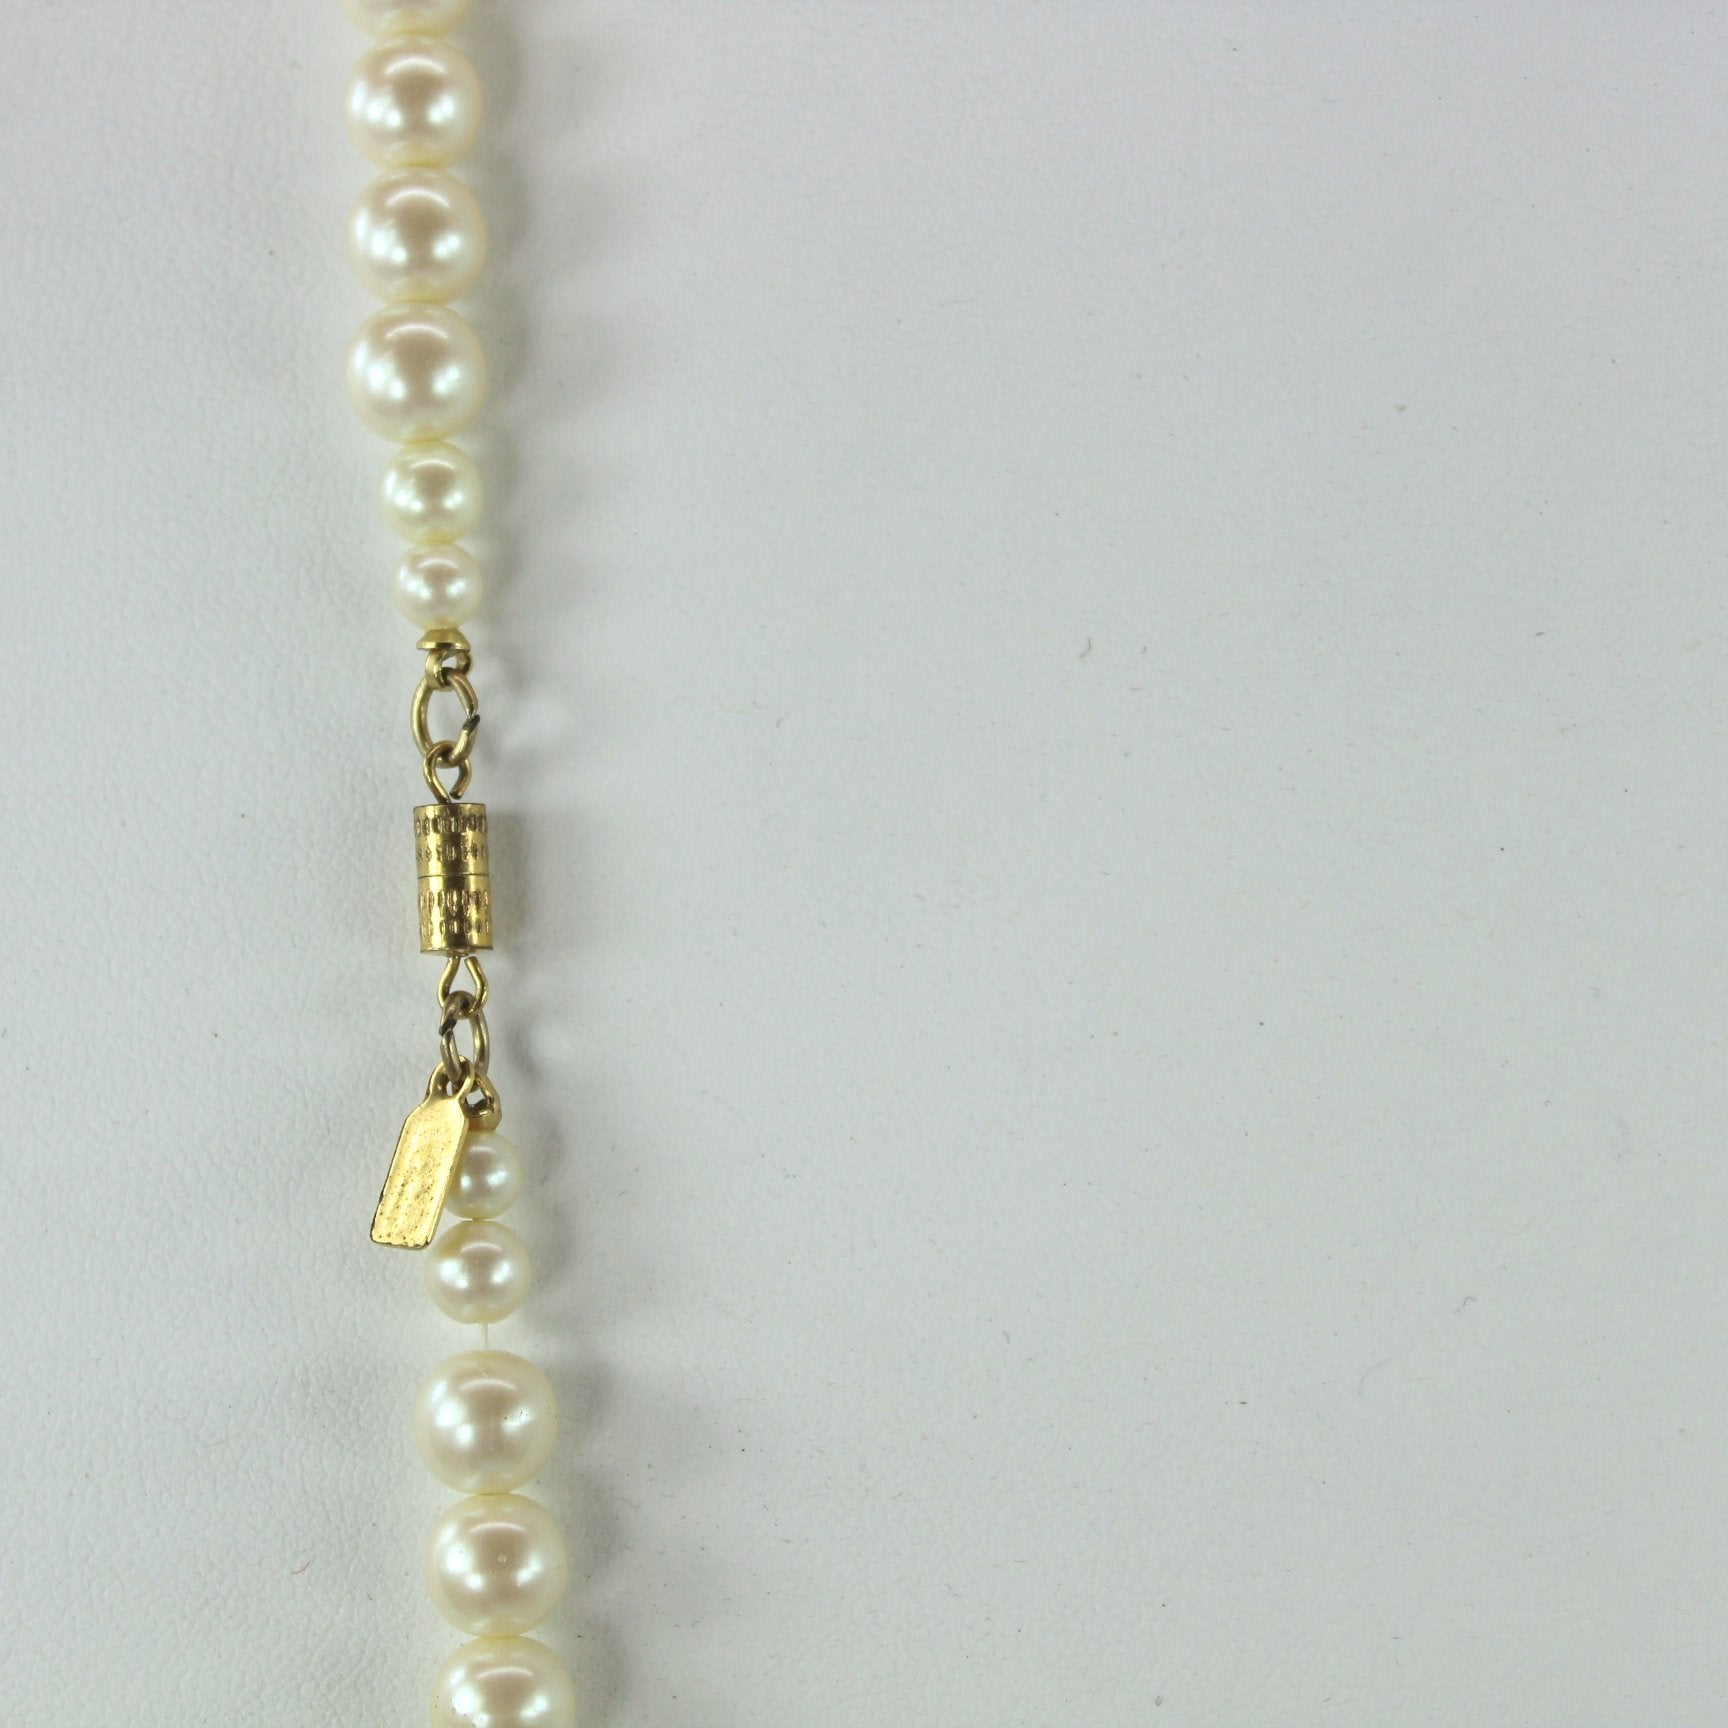 Maker 1928 Necklace Goldtone Filigree Pearls 18" Great Look maker tag orig to necklace